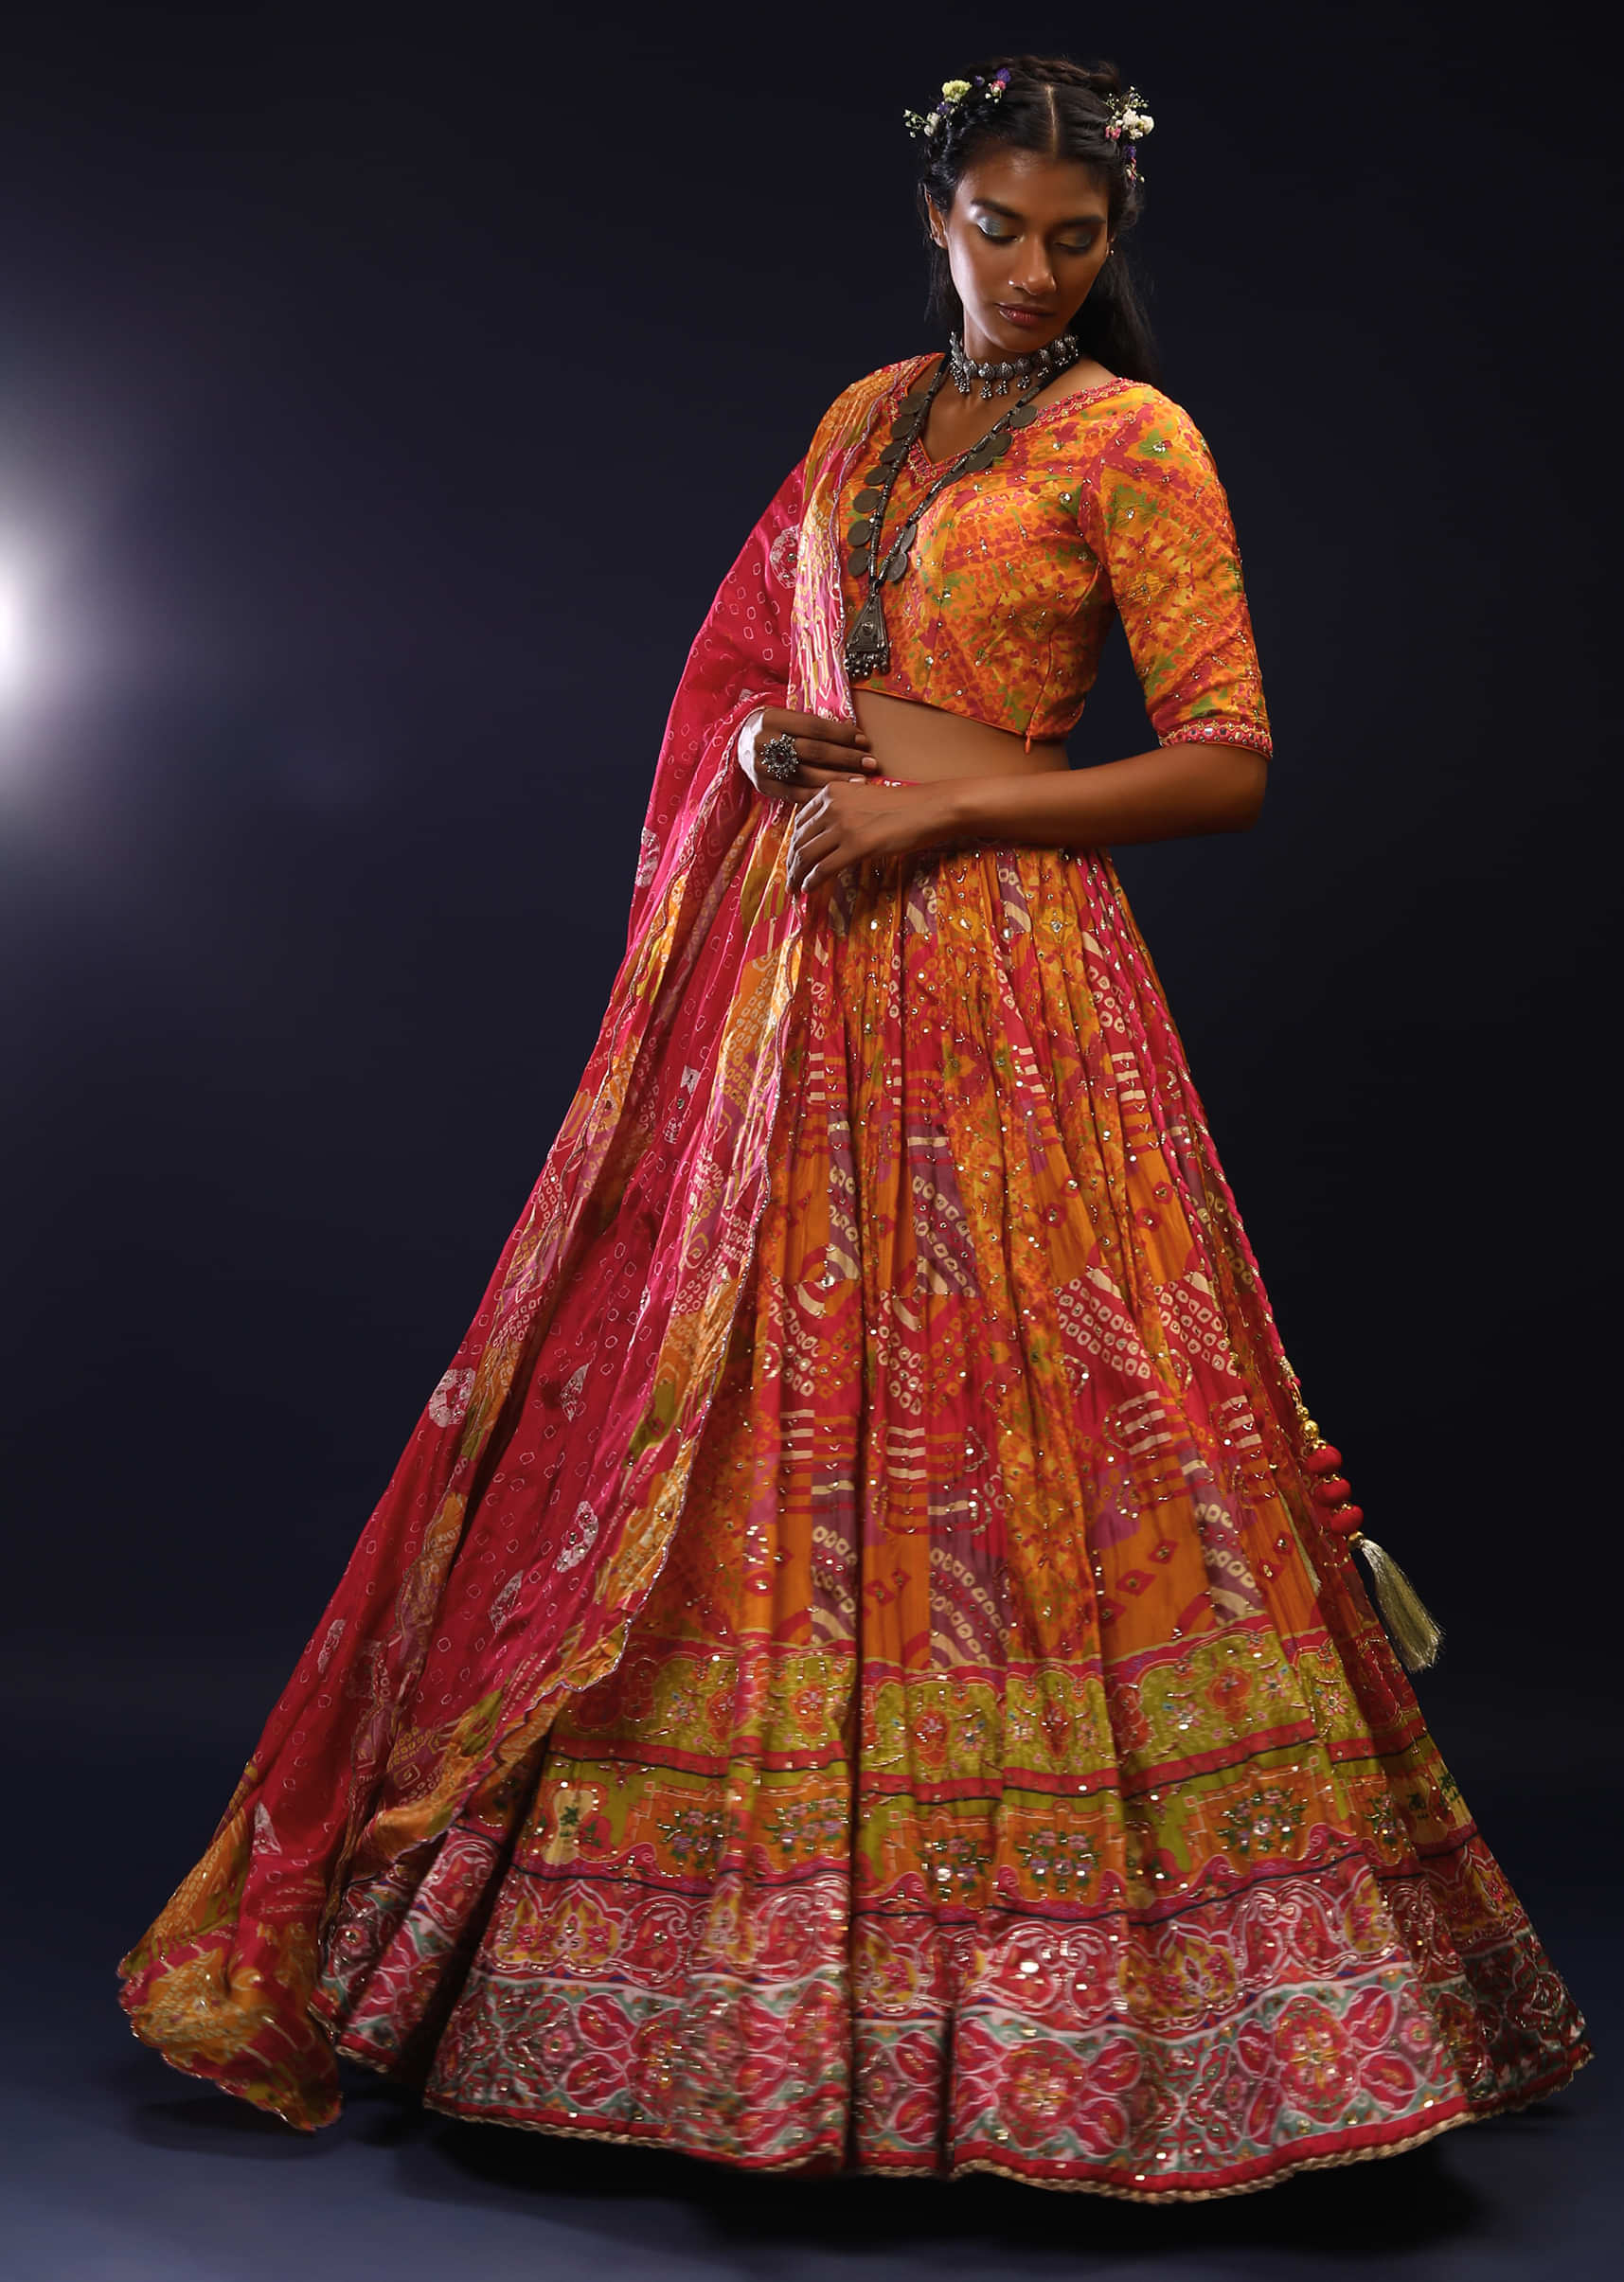 Multi Colored Panelled Lehenga Choli With Jaipuri Tie Dye And Floral Print